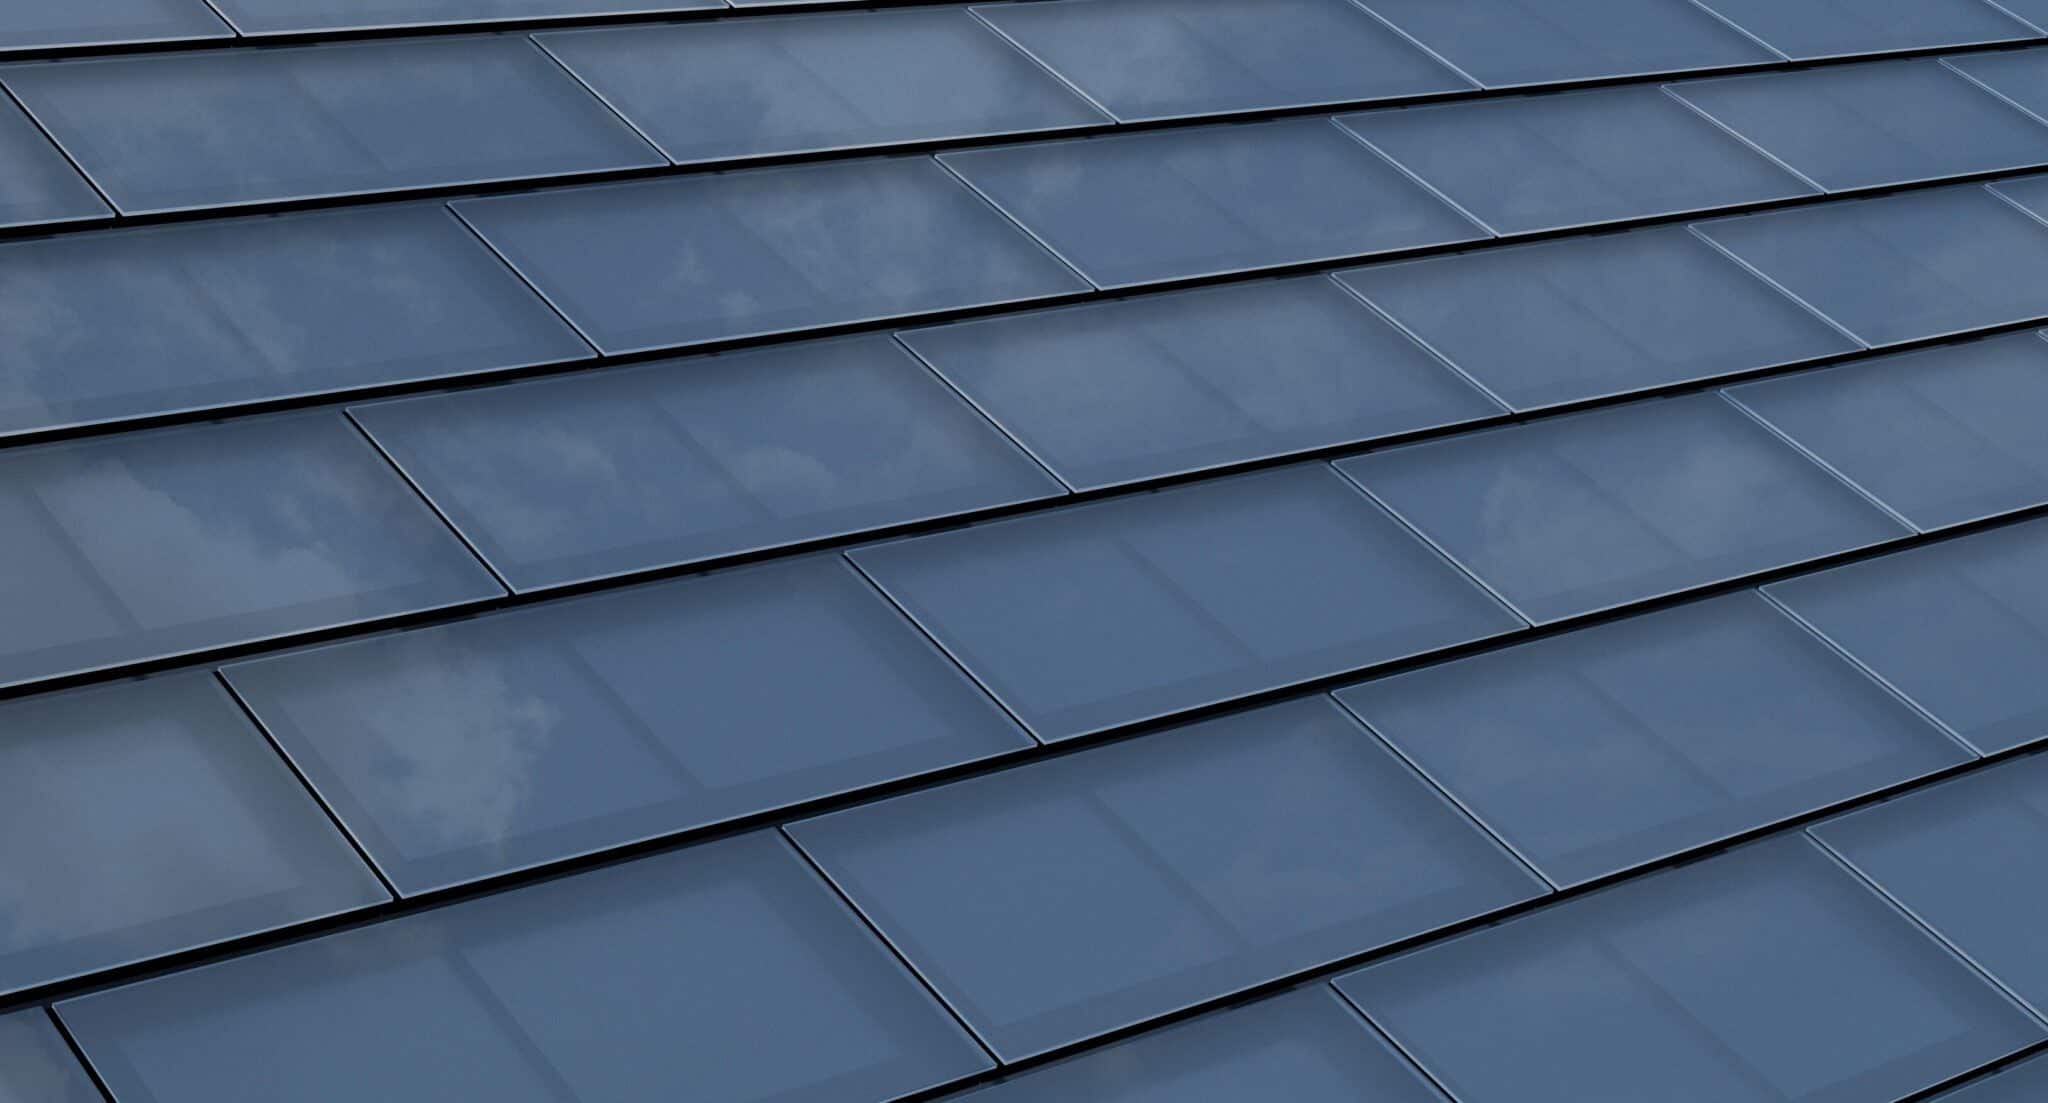 Tesla solar roof tiles